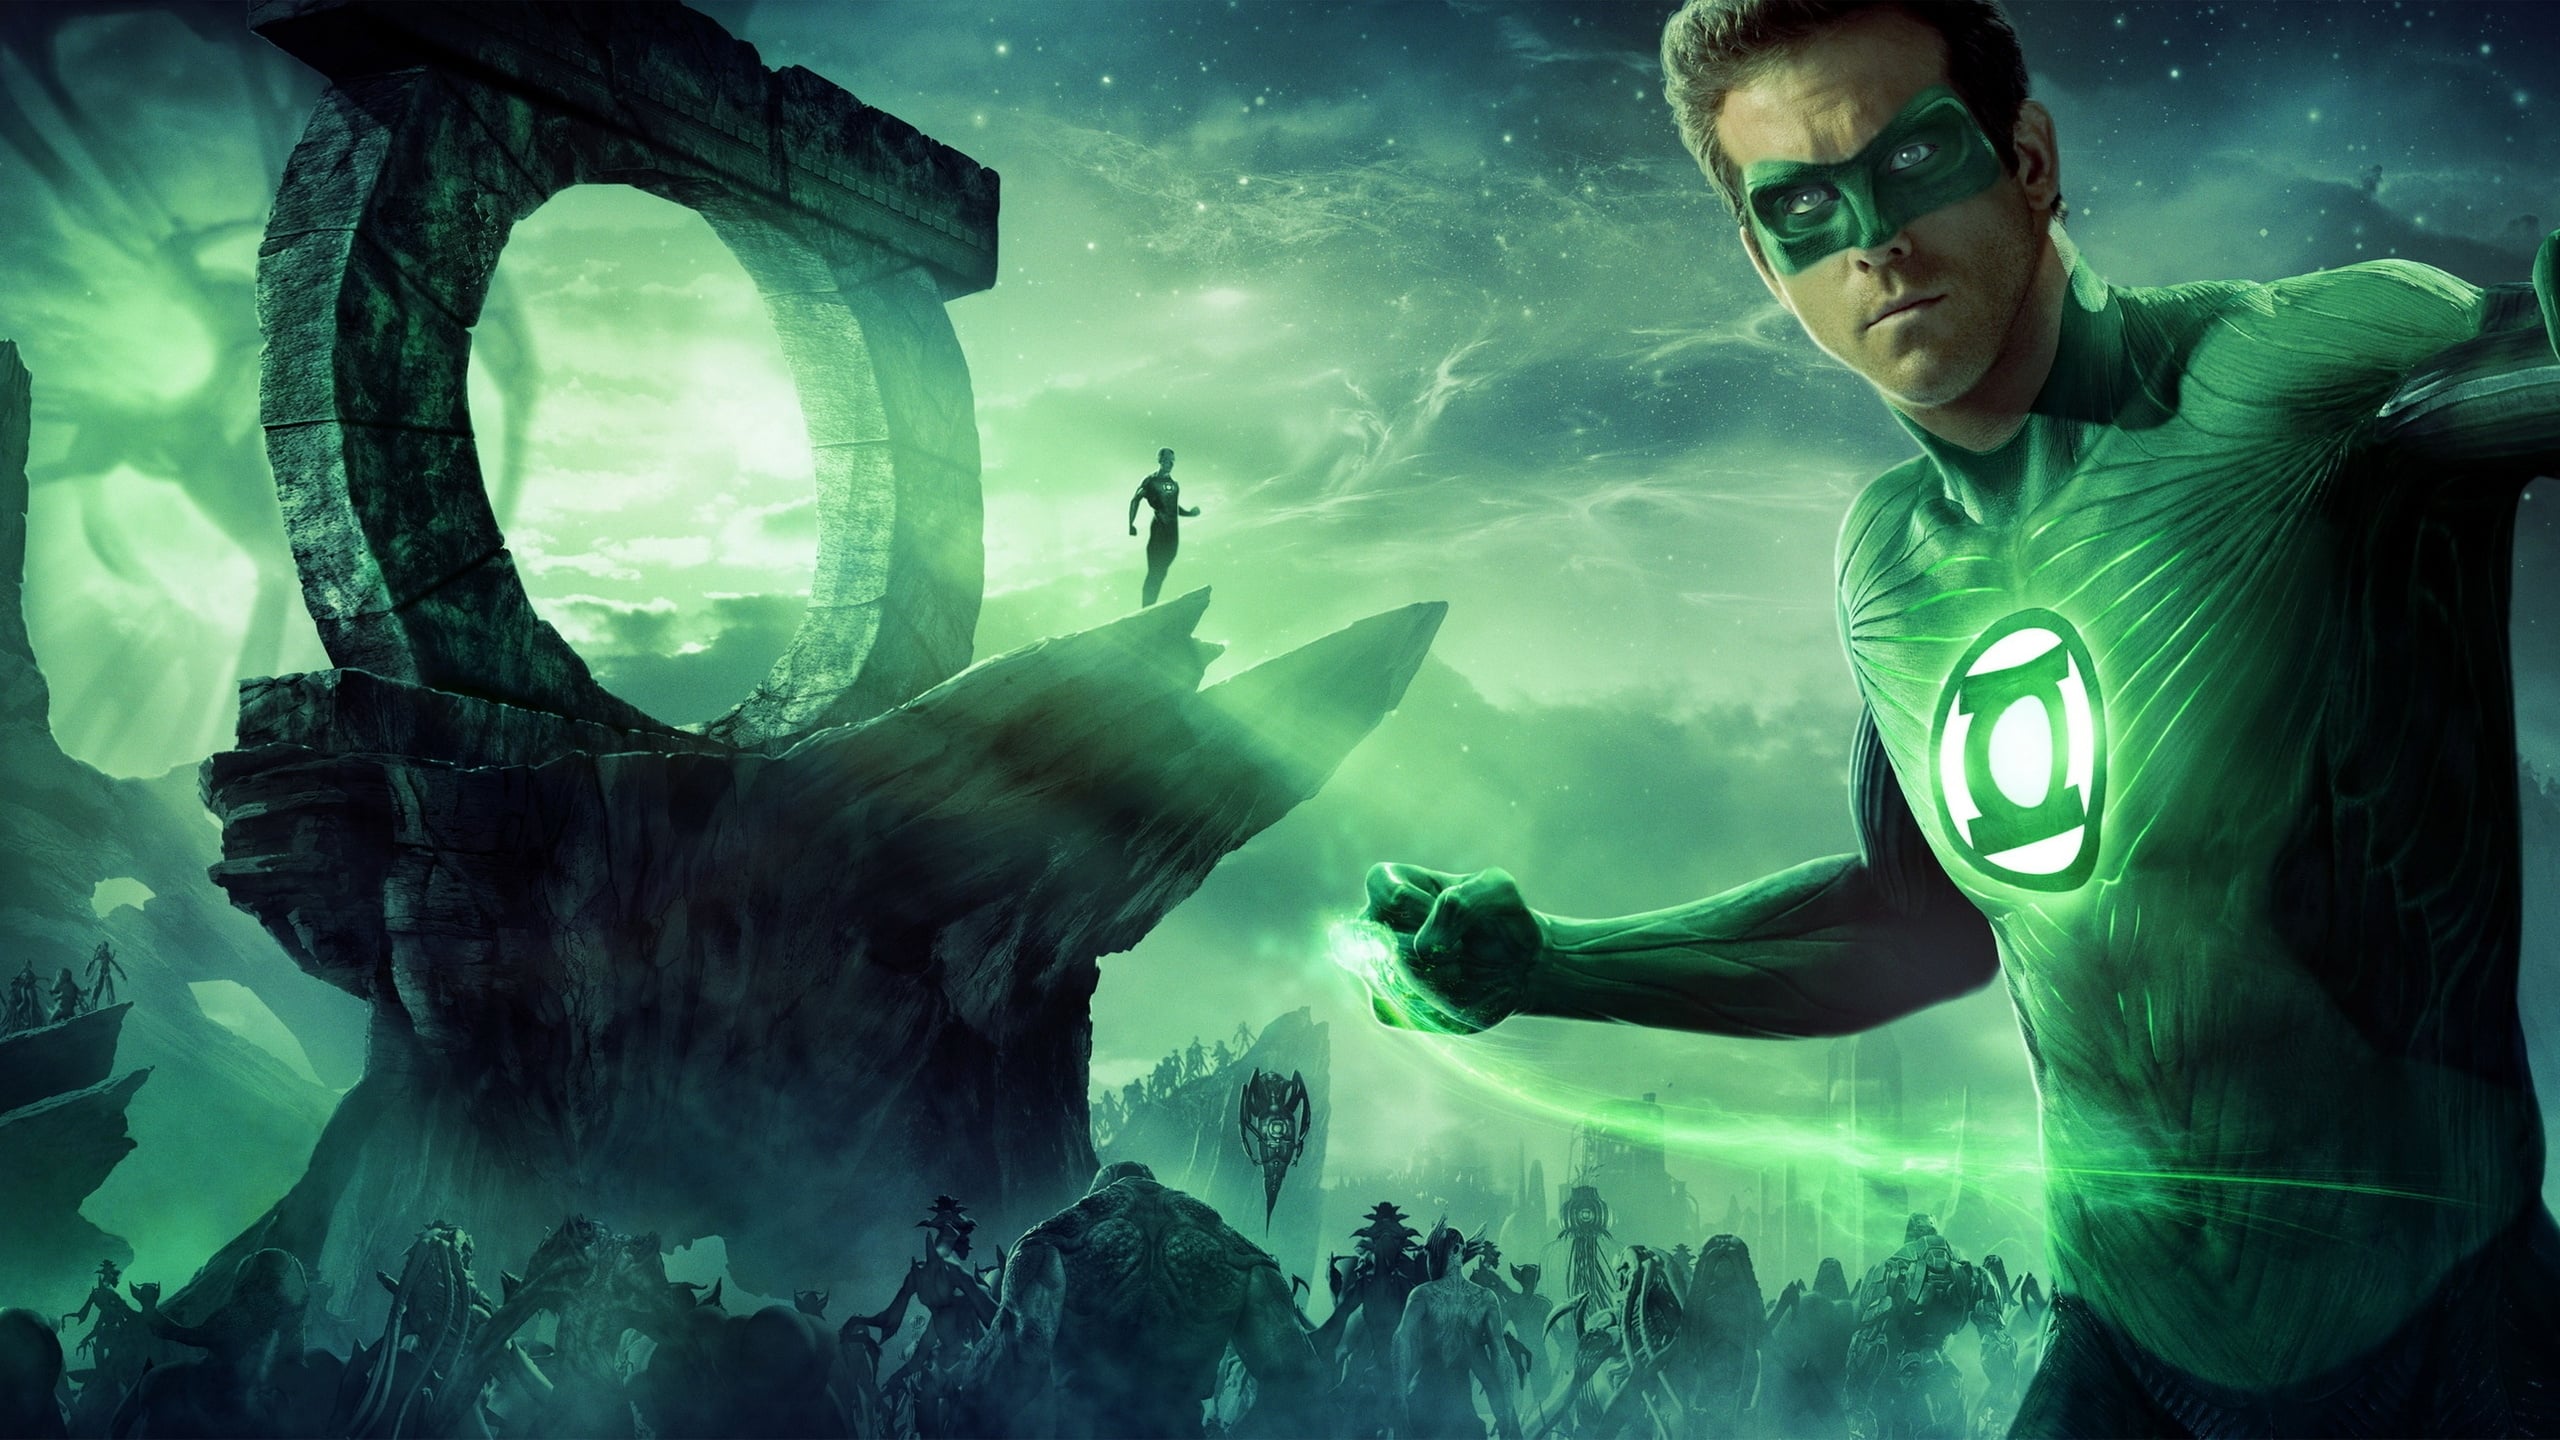 Green Lantern 2011 123movies